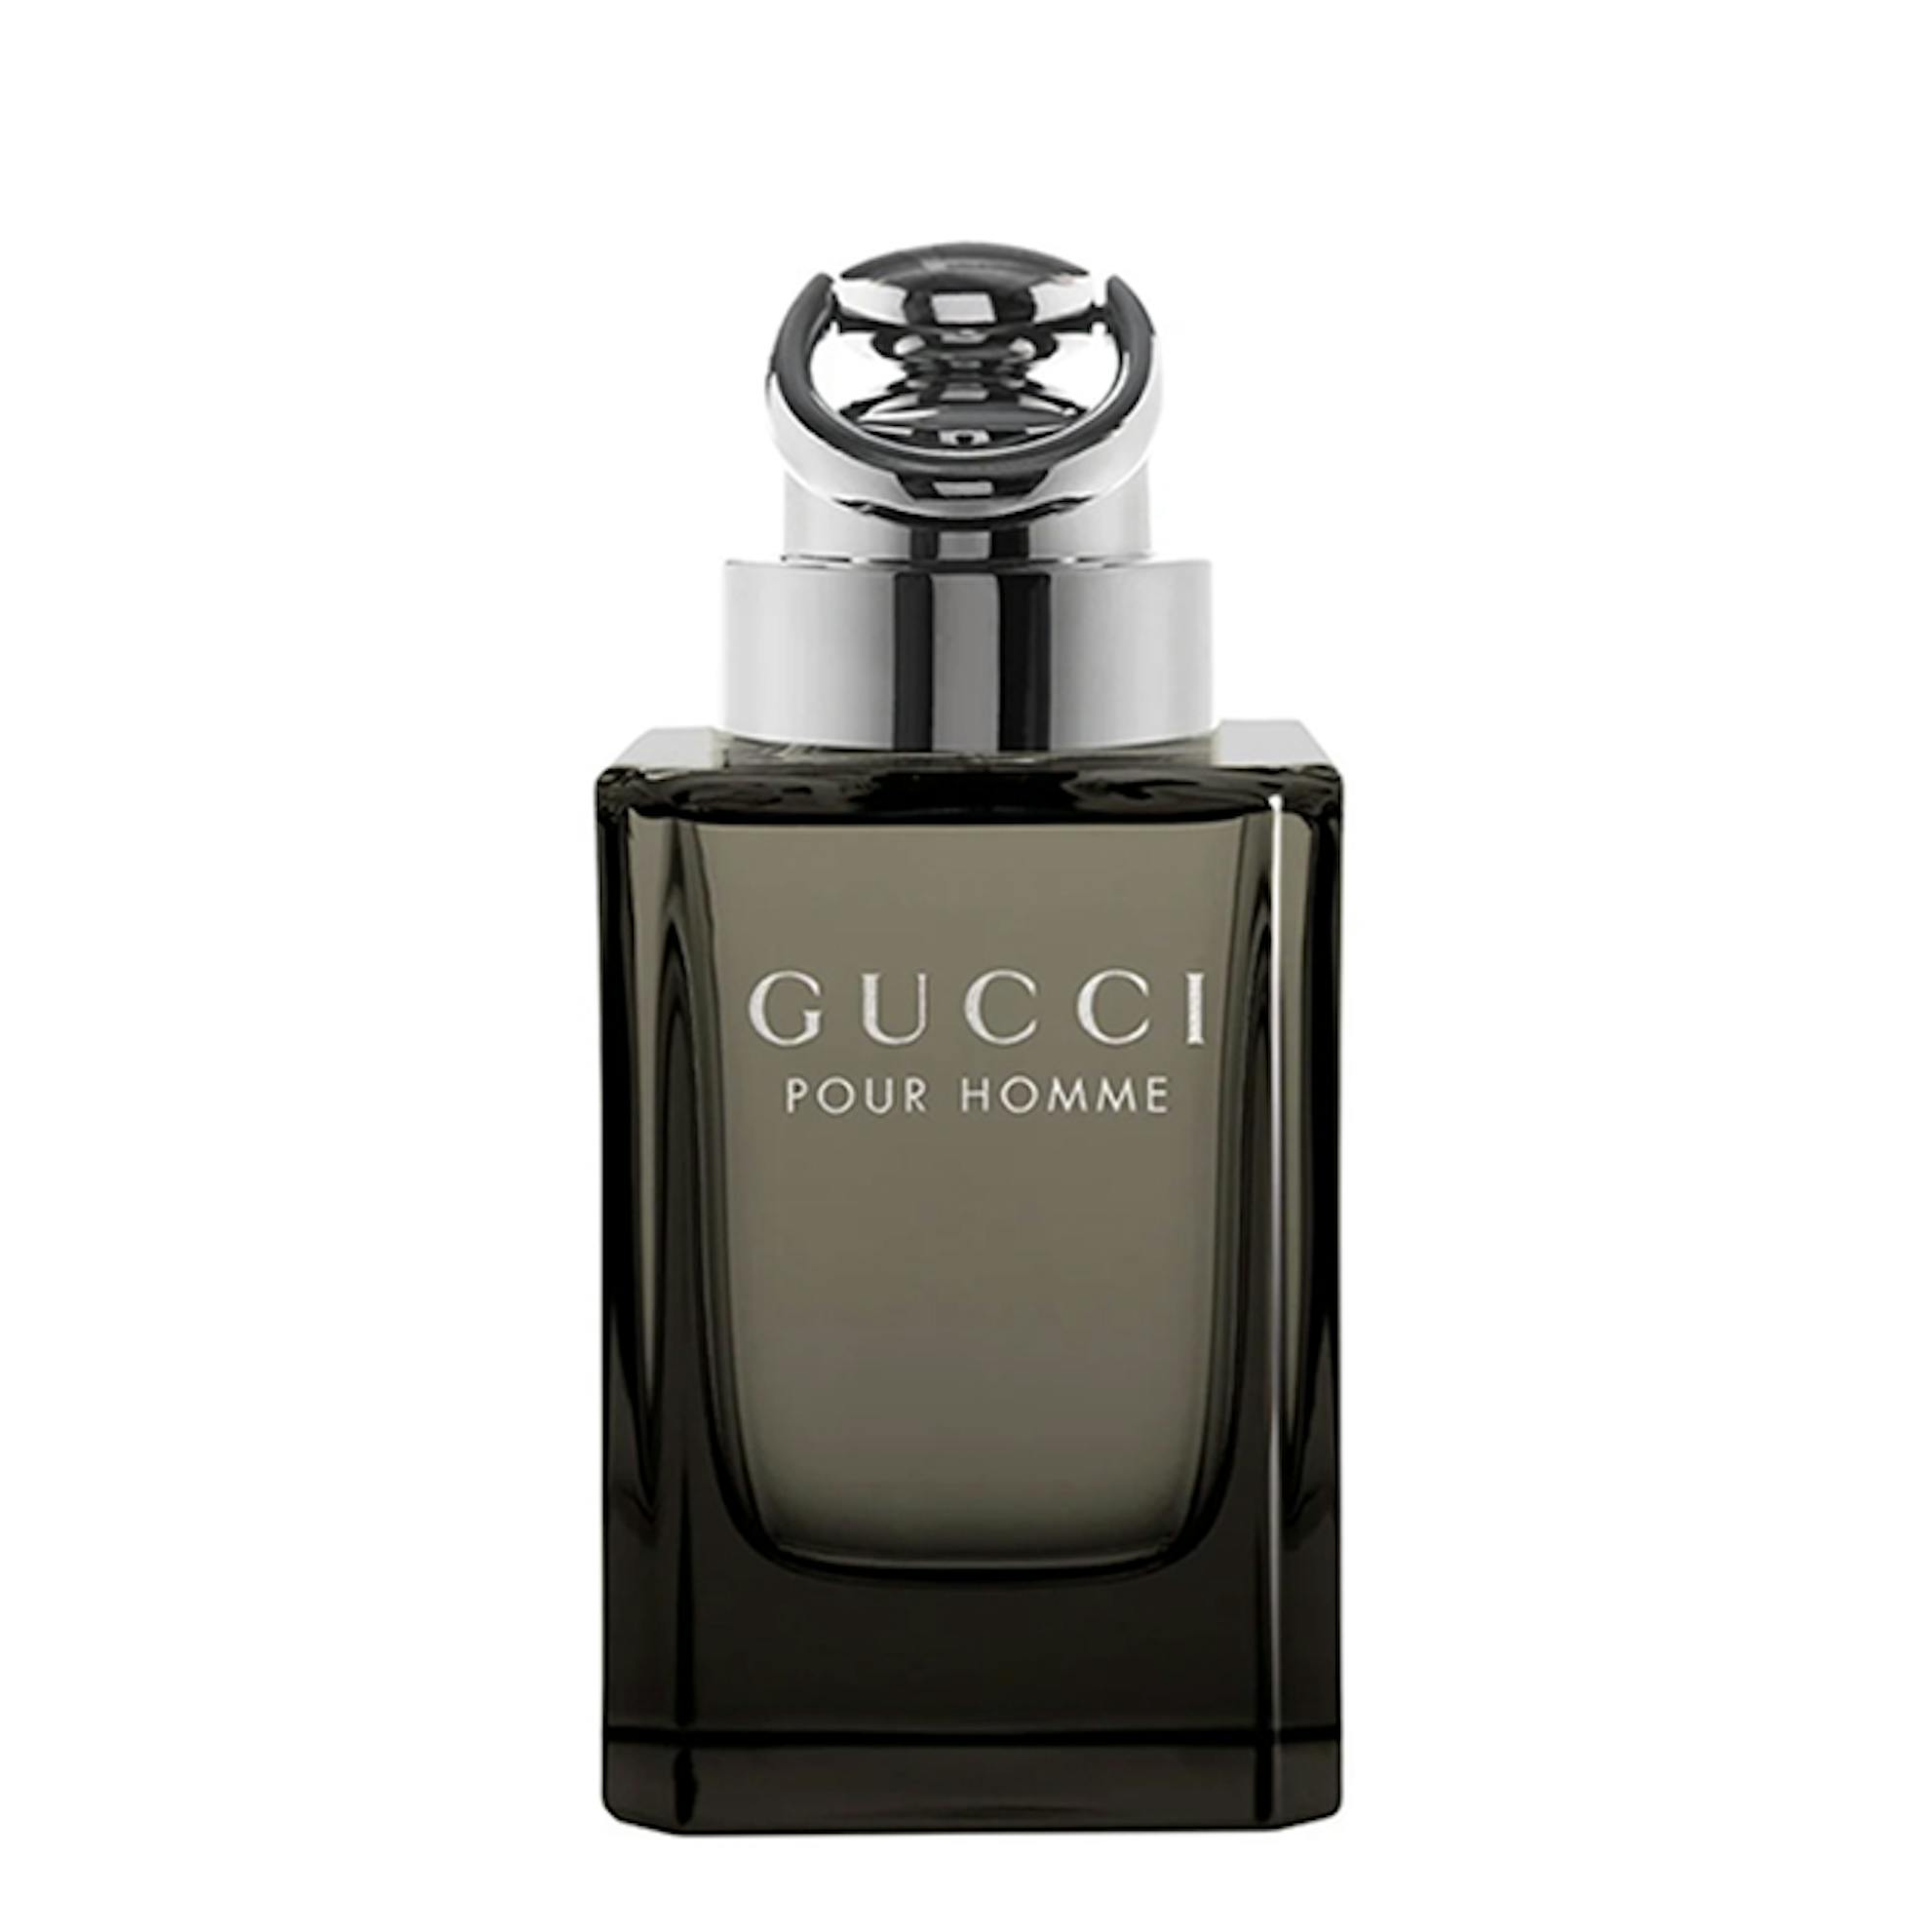 Gucci pour homme купить. Gucci "Gucci by Gucci pour homme". Gucci Gucci pour homme. Туалетная вода Gucci Gucci by Gucci pour homme. Gucci pour homme мужские.